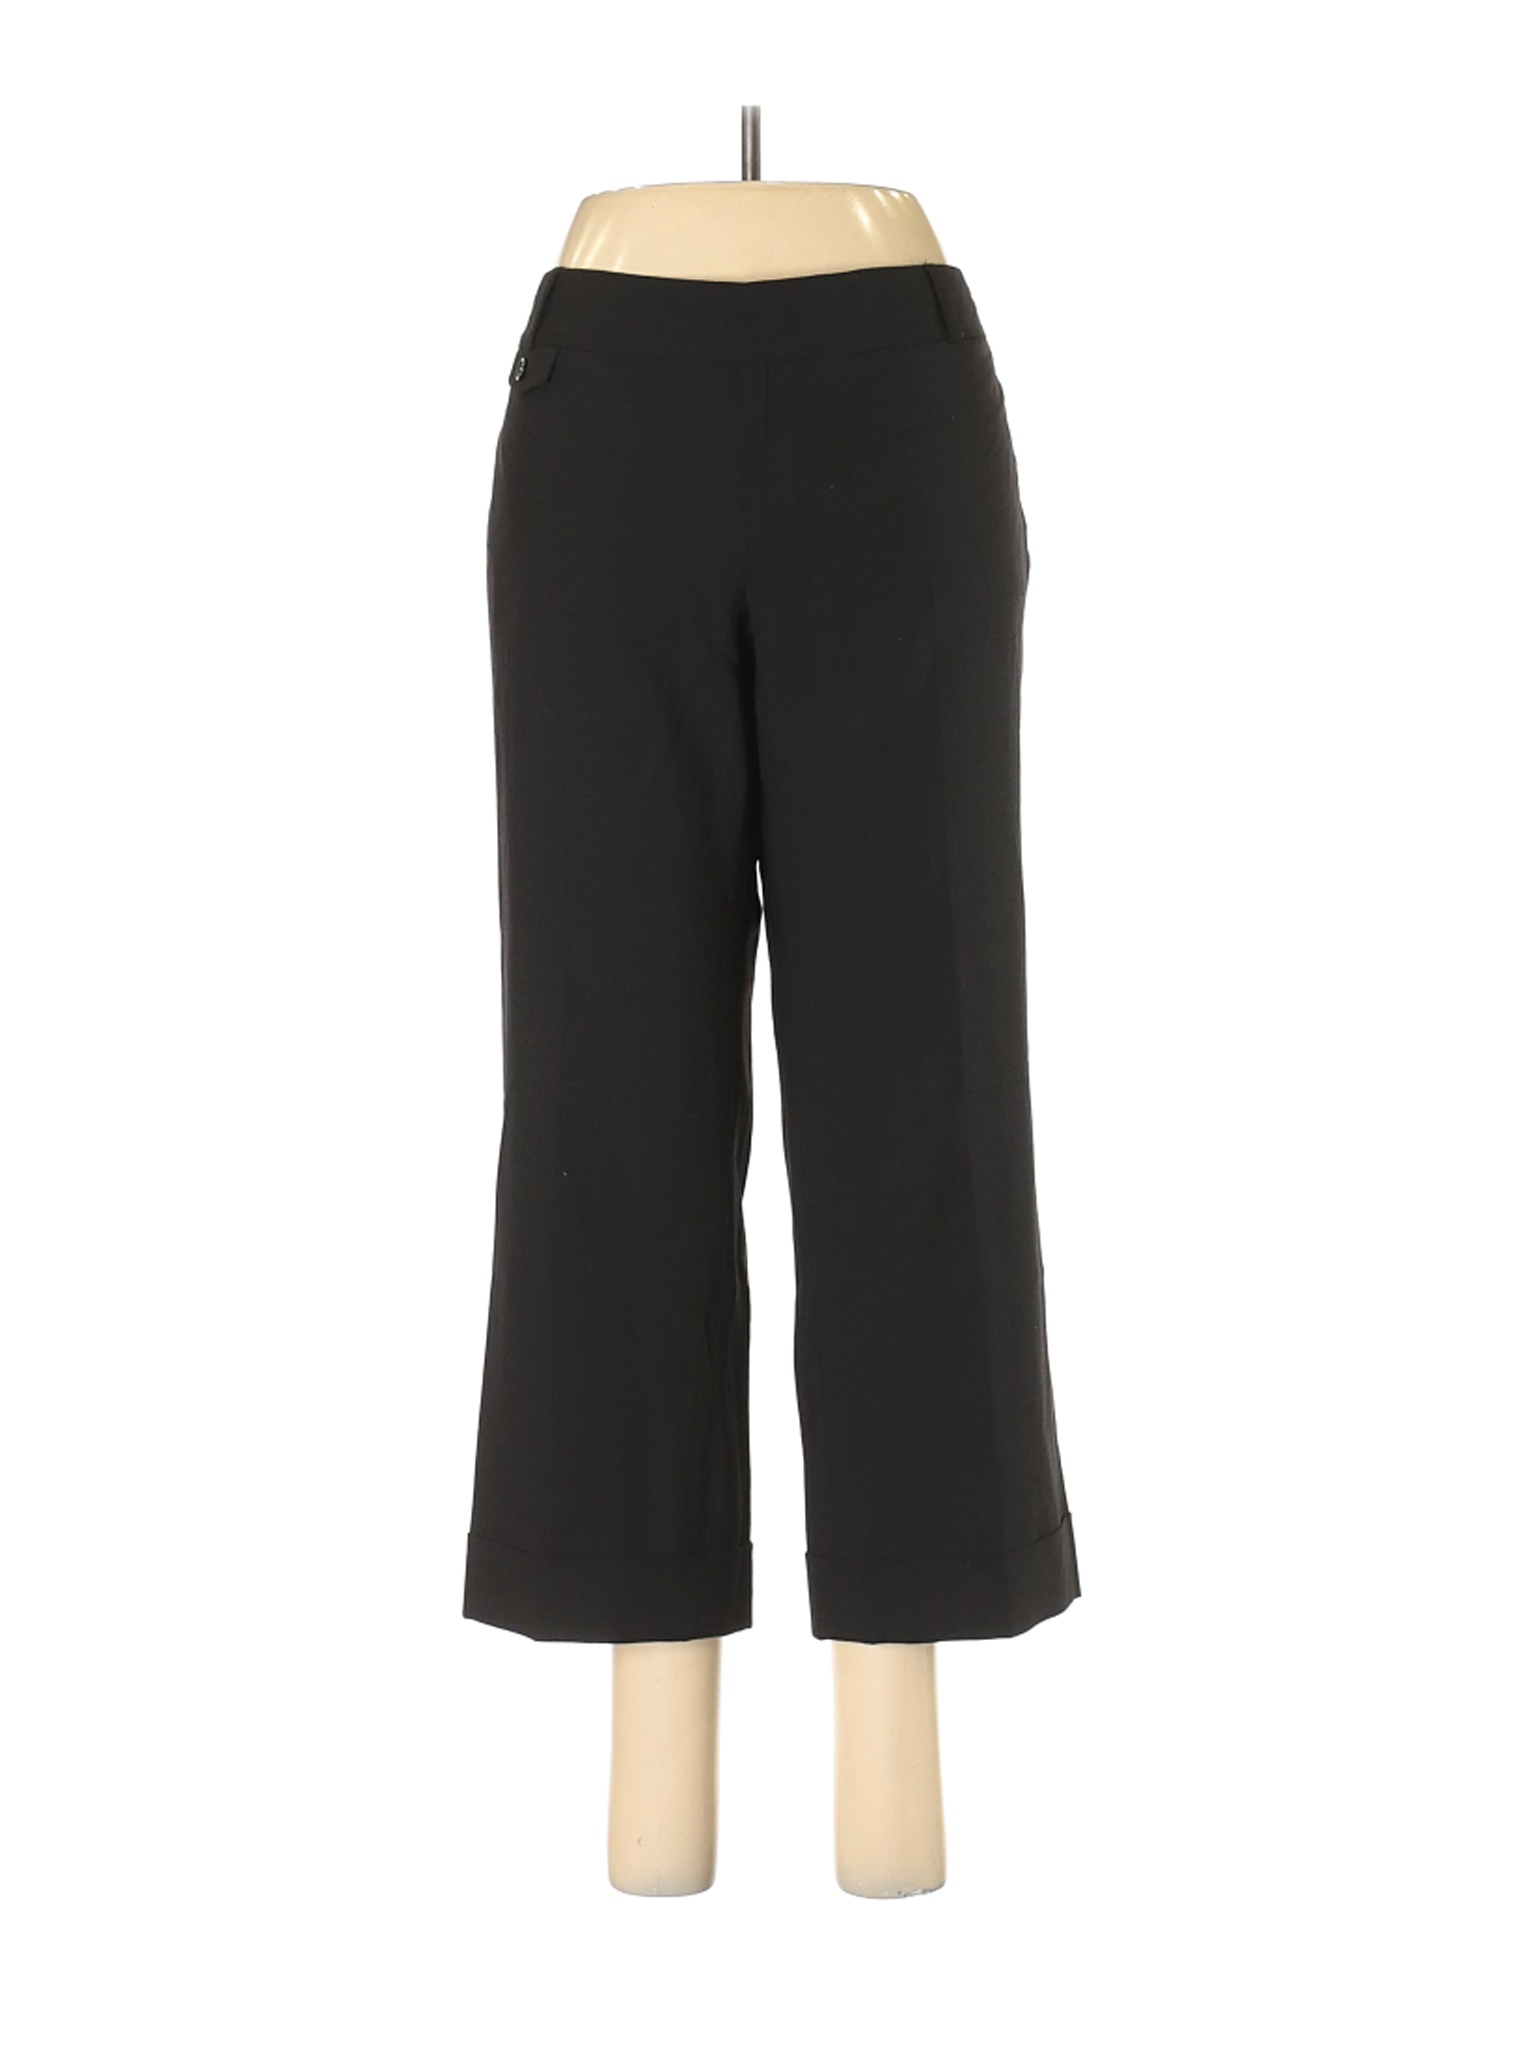 Club Monaco Women Black Wool Pants 8 | eBay